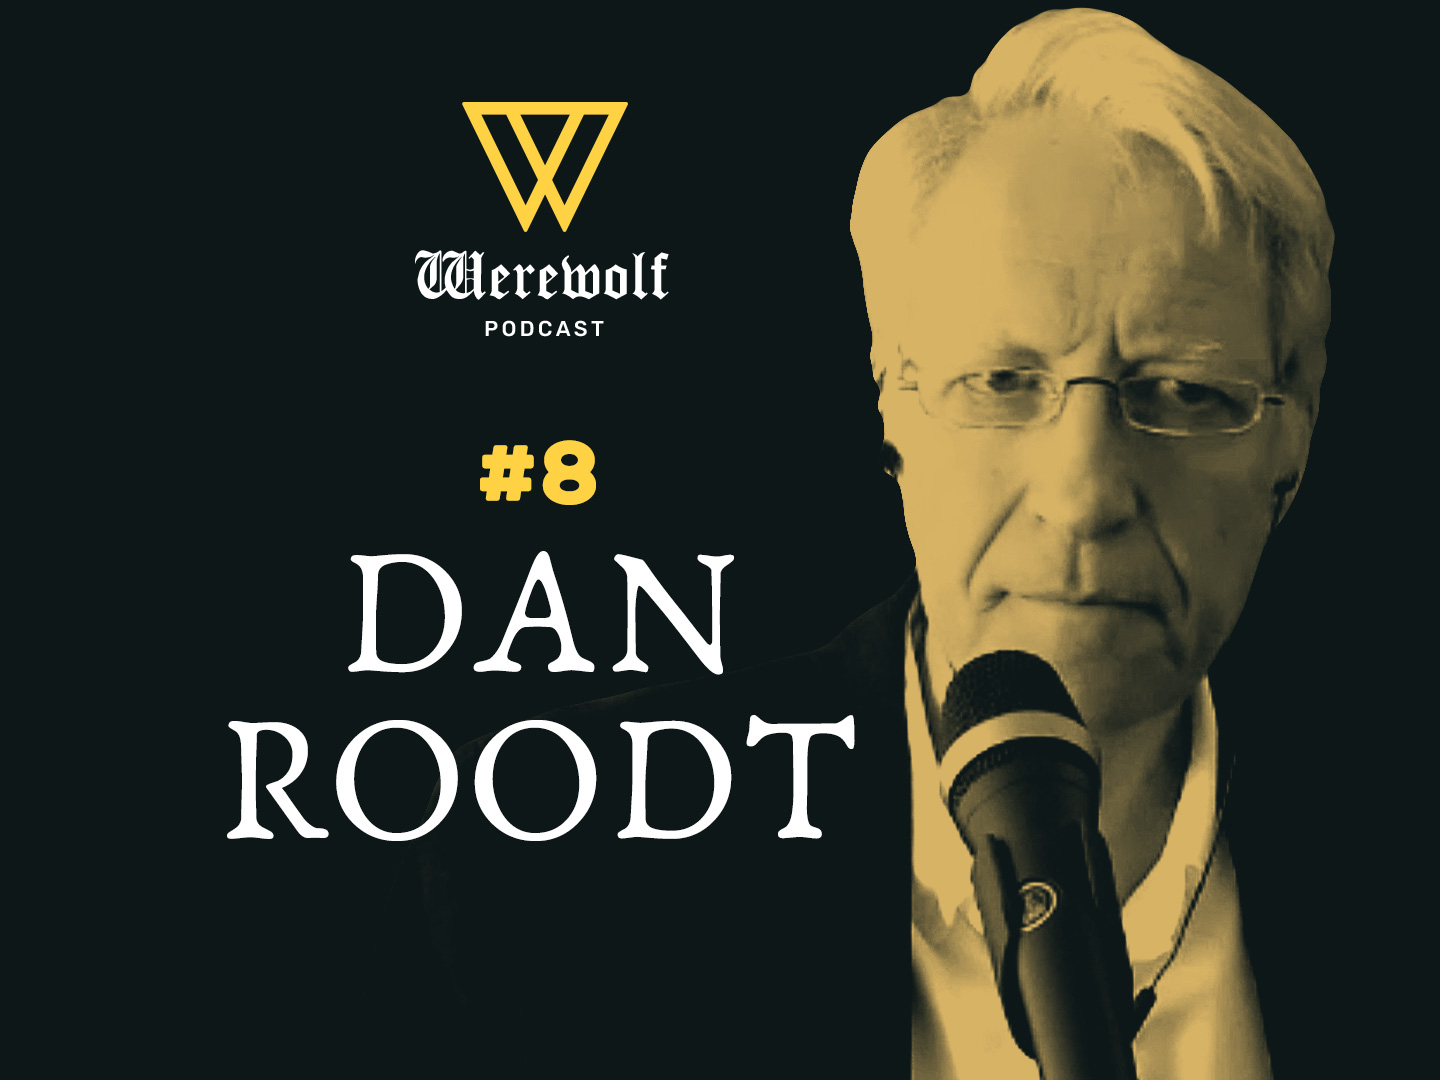 Werewolf Podcast #8: Dan Roodt